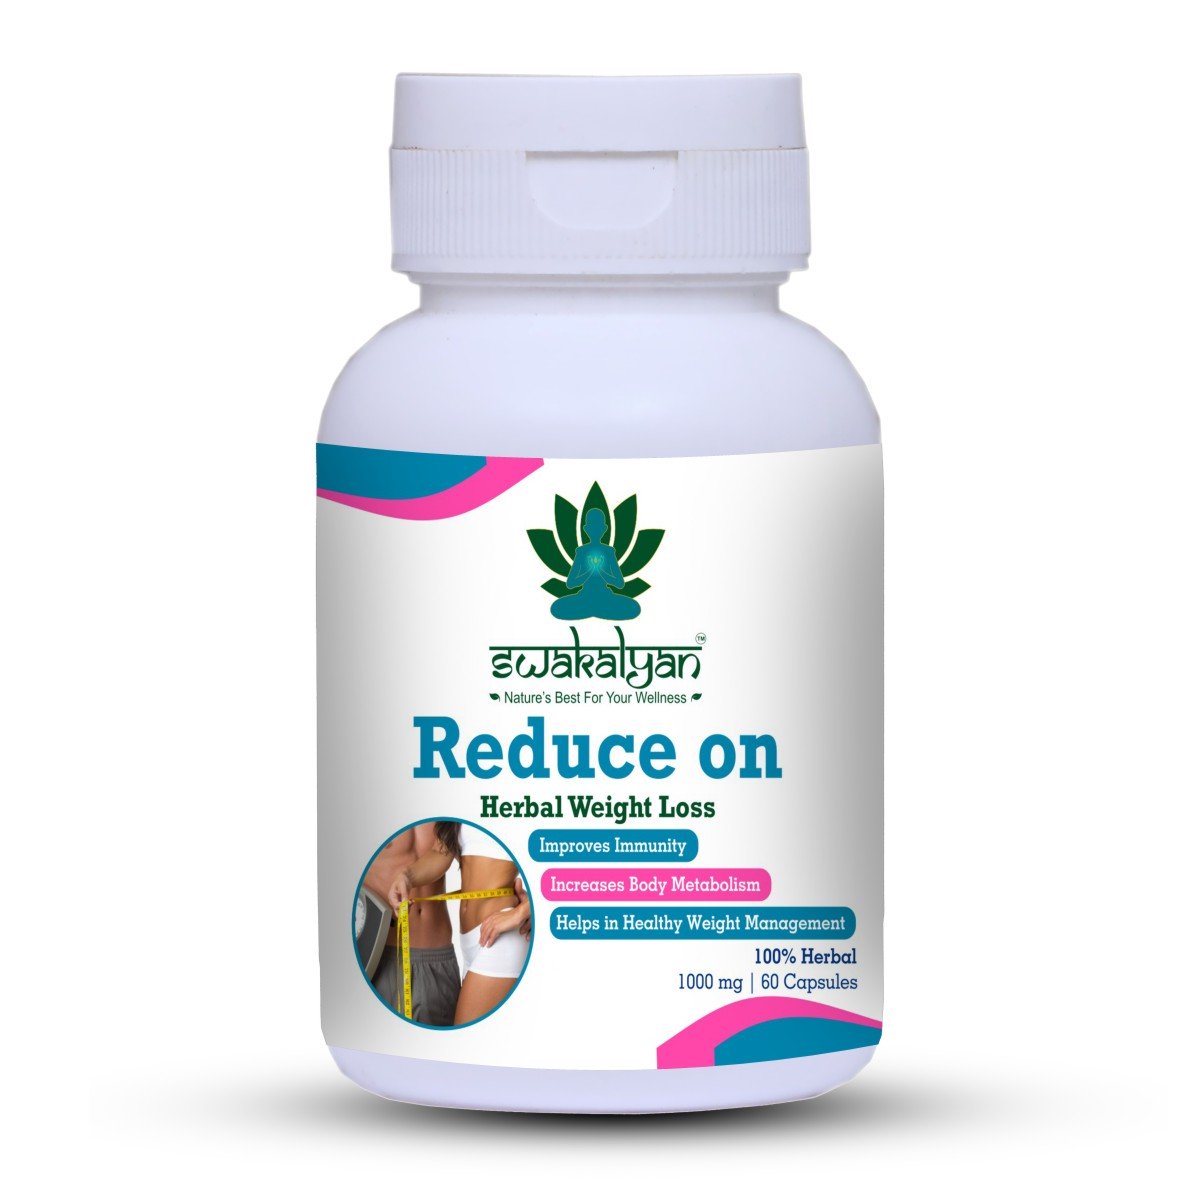 Buy Swakalyan Reduce On - Herbal Weight Loss at Best Price Online